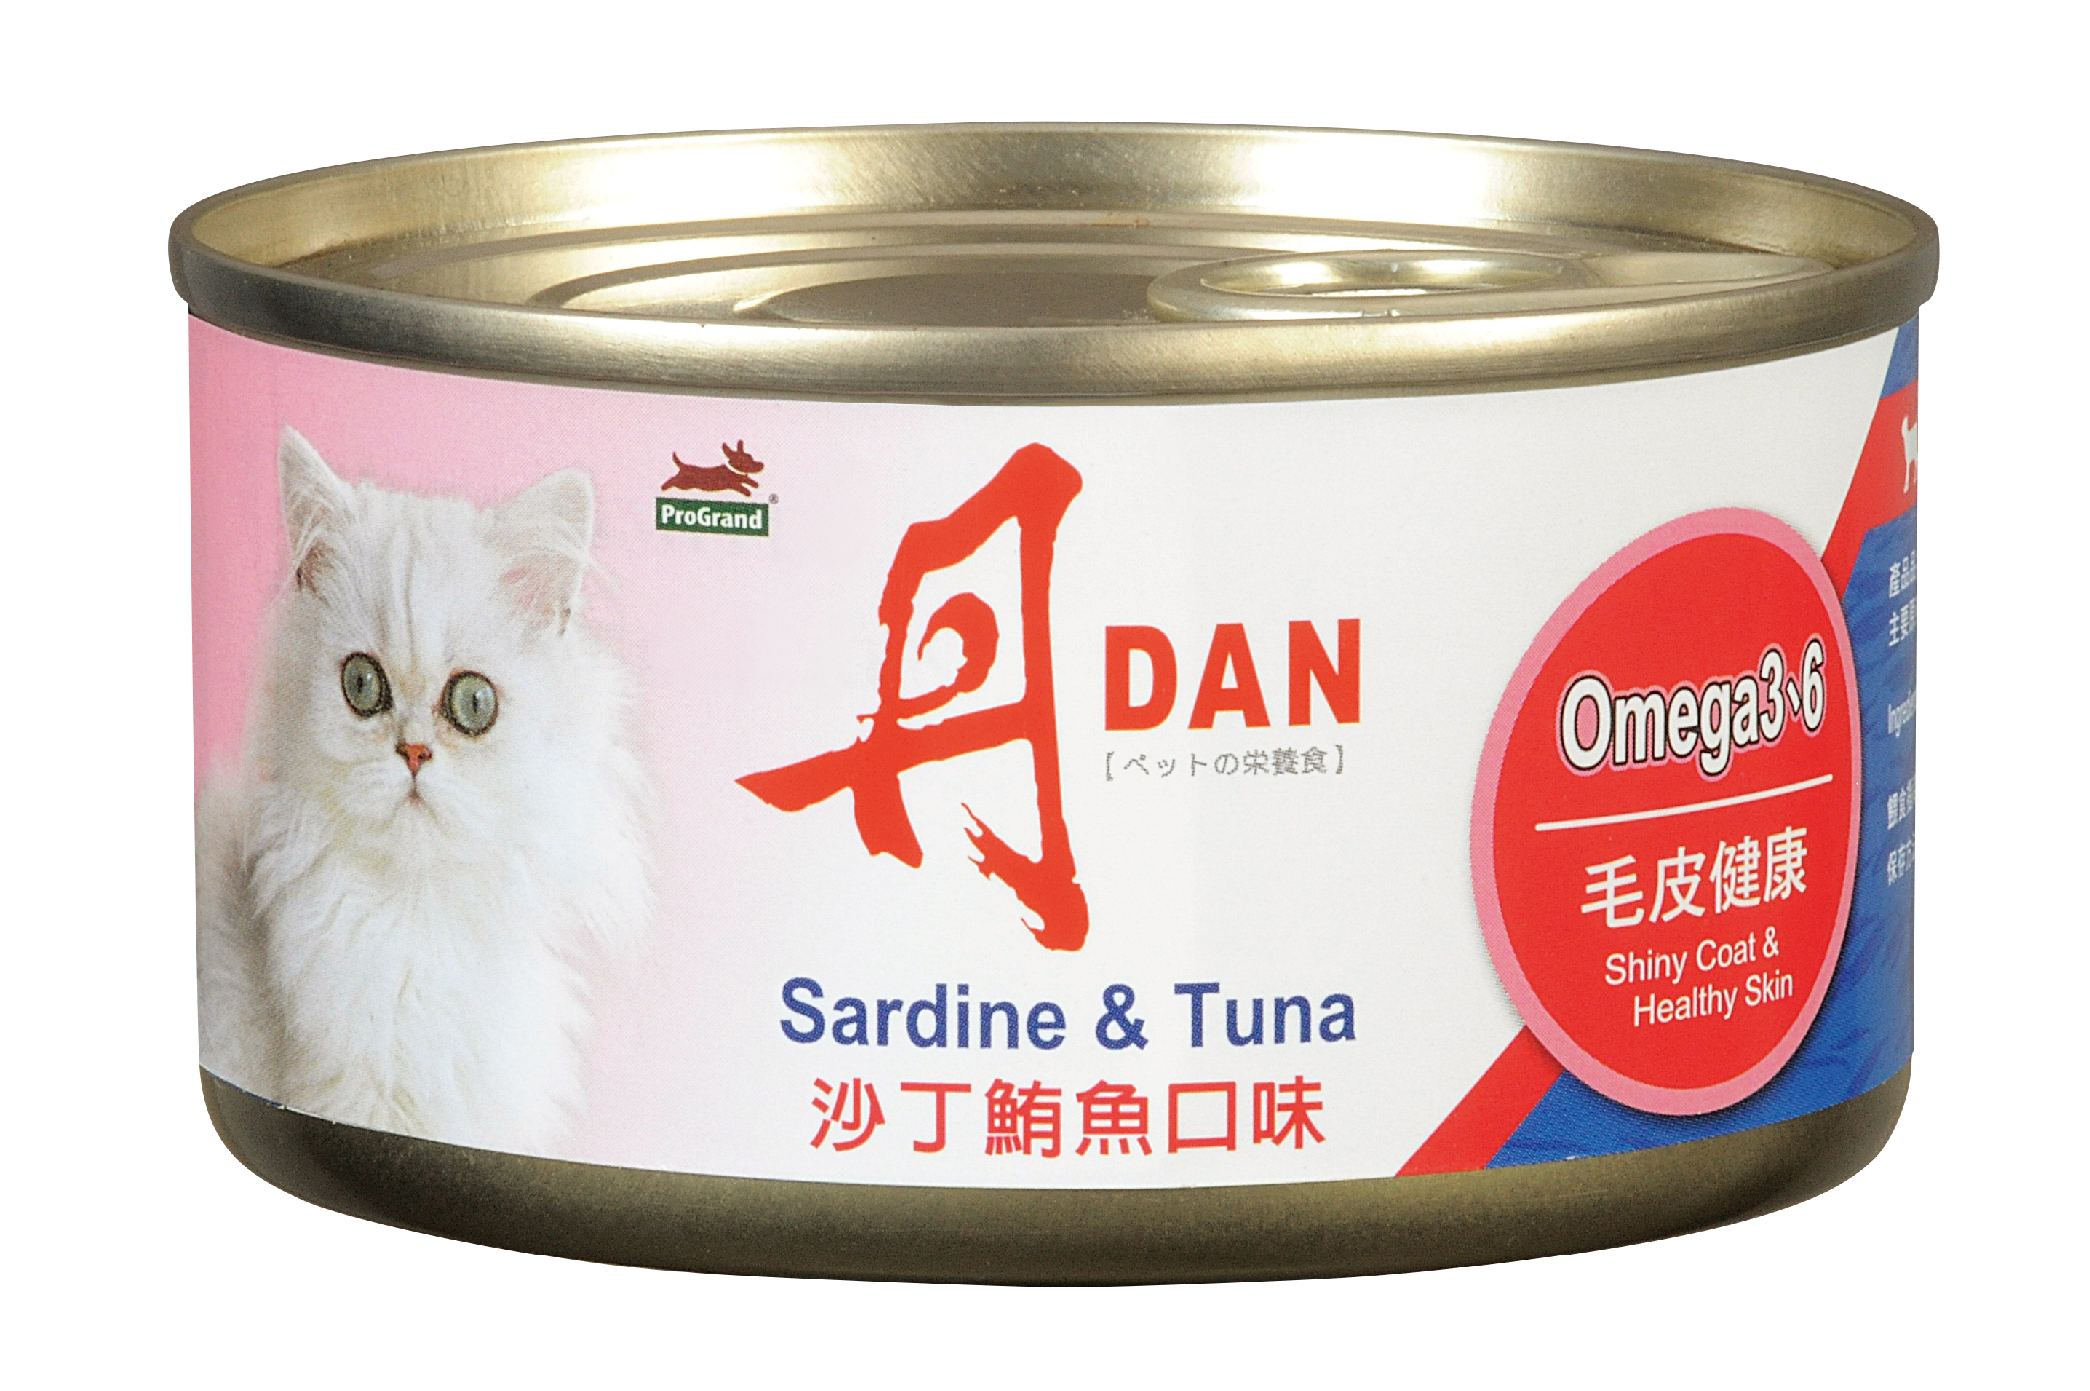 丹DAN 愛貓罐頭沙丁鮪魚口味
DAN Canned Cat Food - Sardine&Tuna Flavor